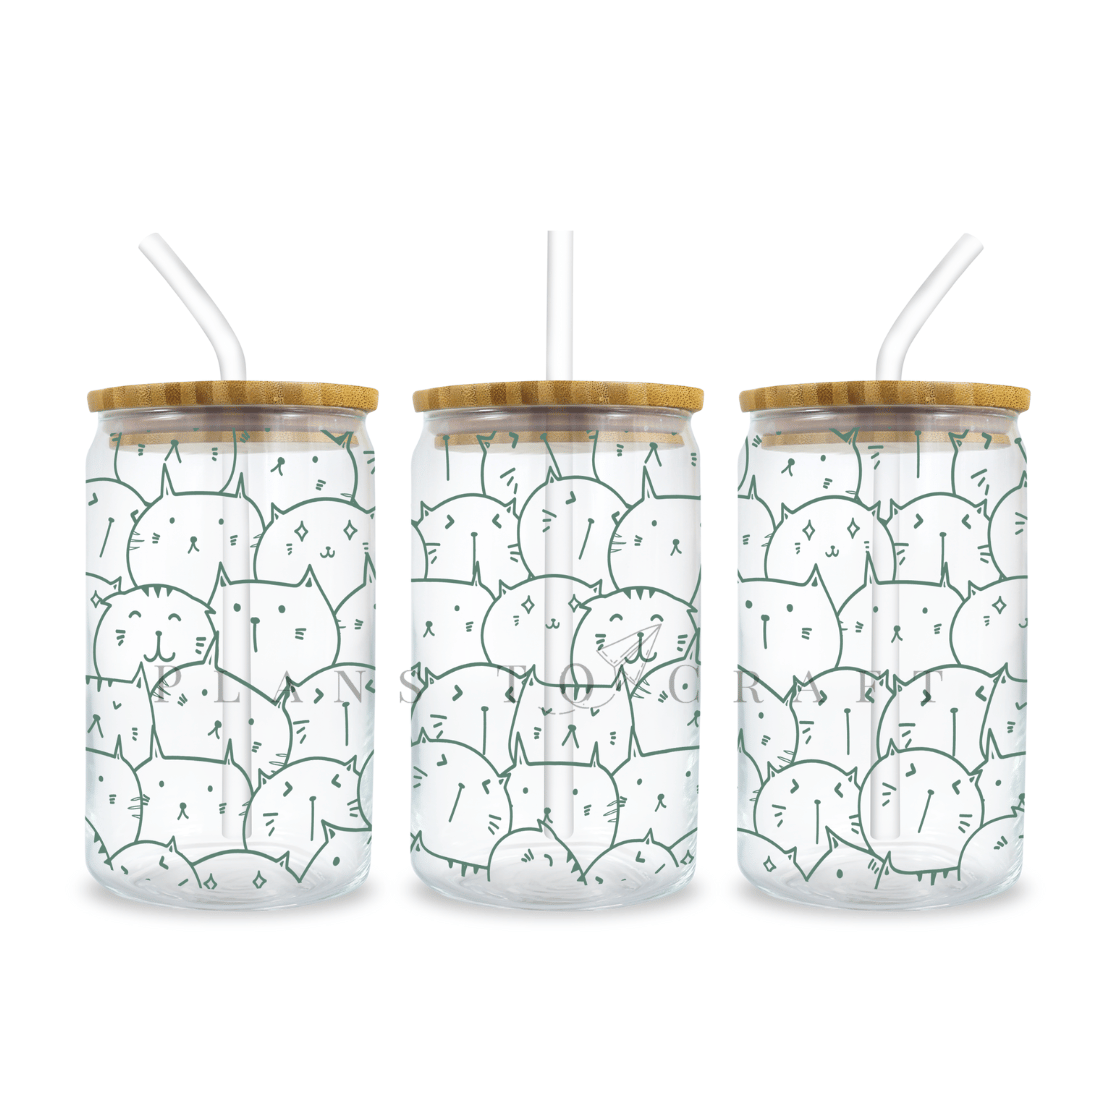 Three glass jars with straw lids with animals on them.